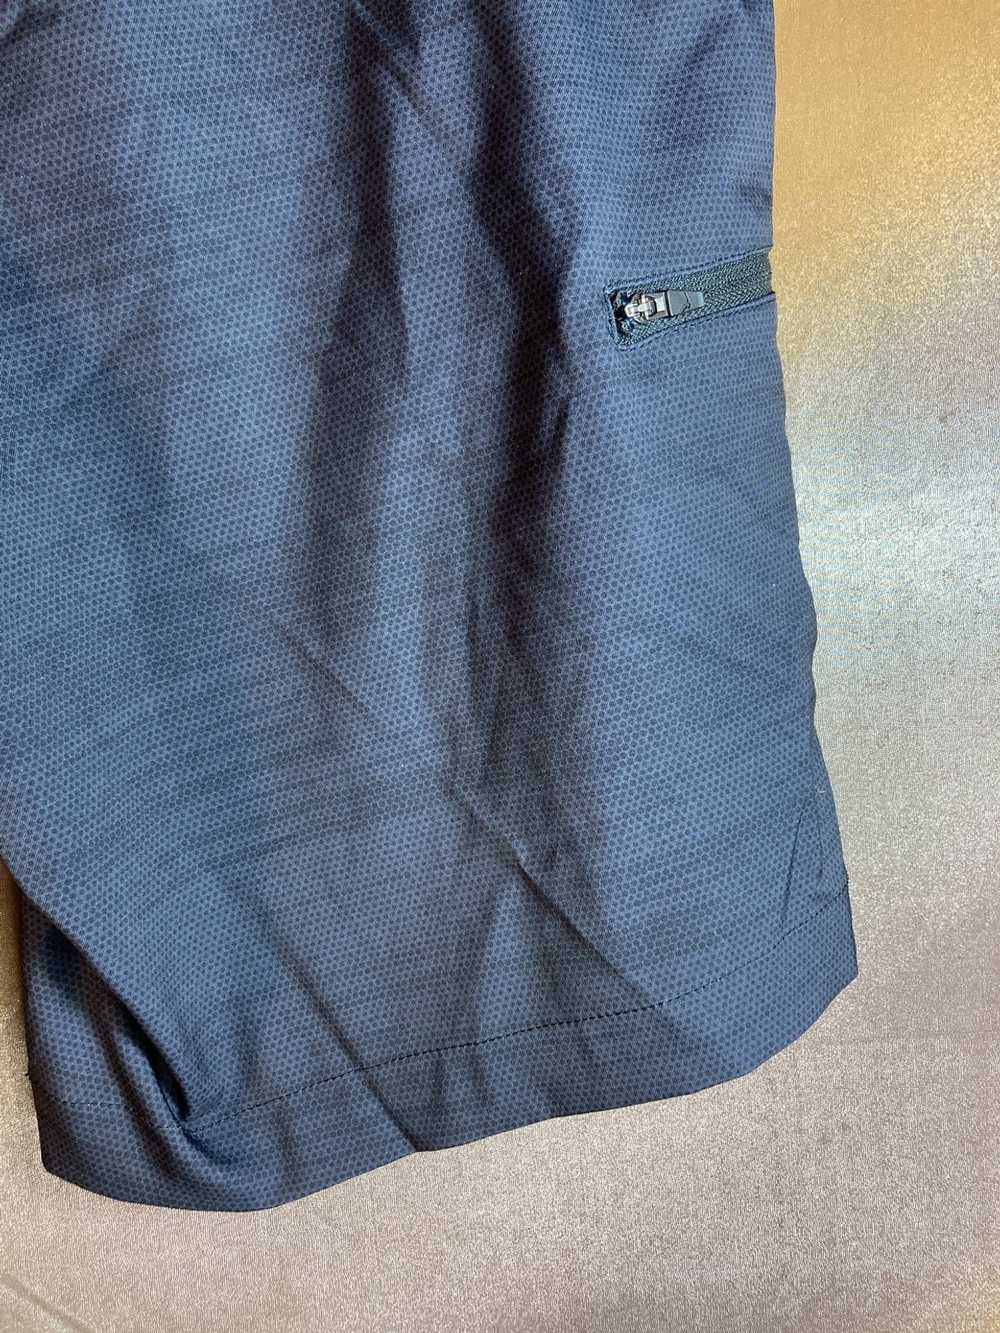 Hawke & Co. Dark gray flat front dress shorts. 32… - image 5